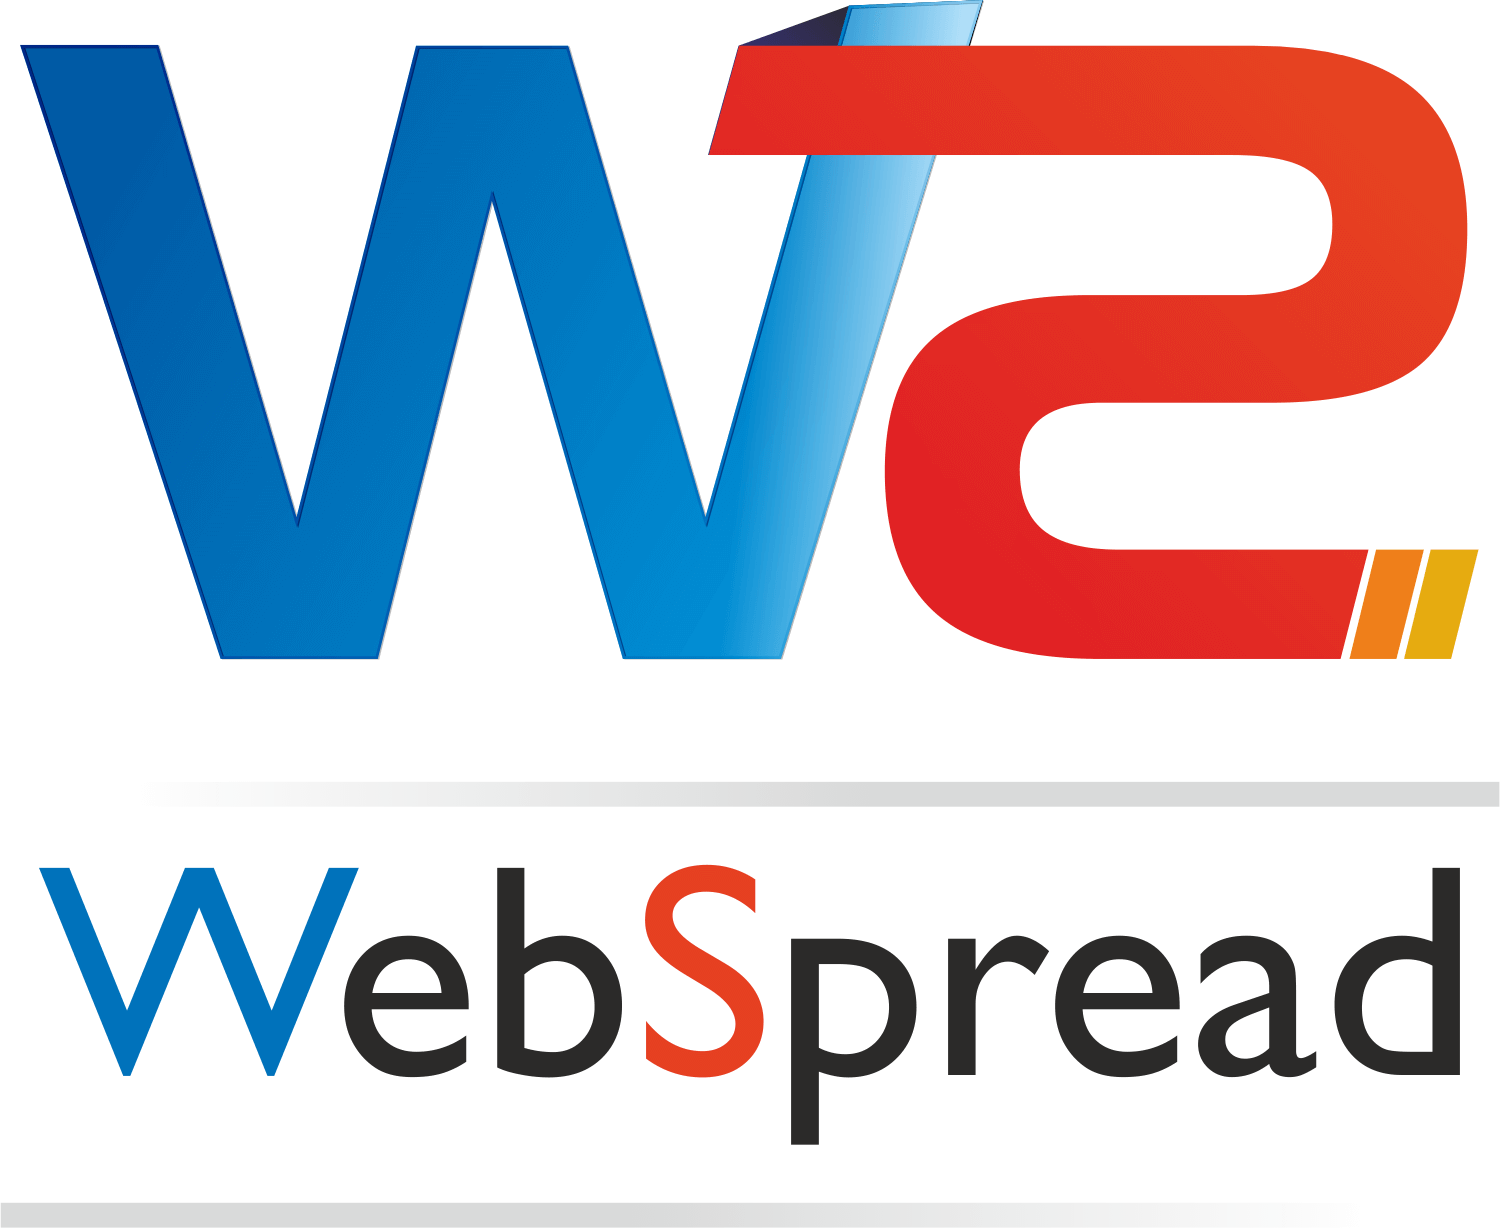 WebSpread